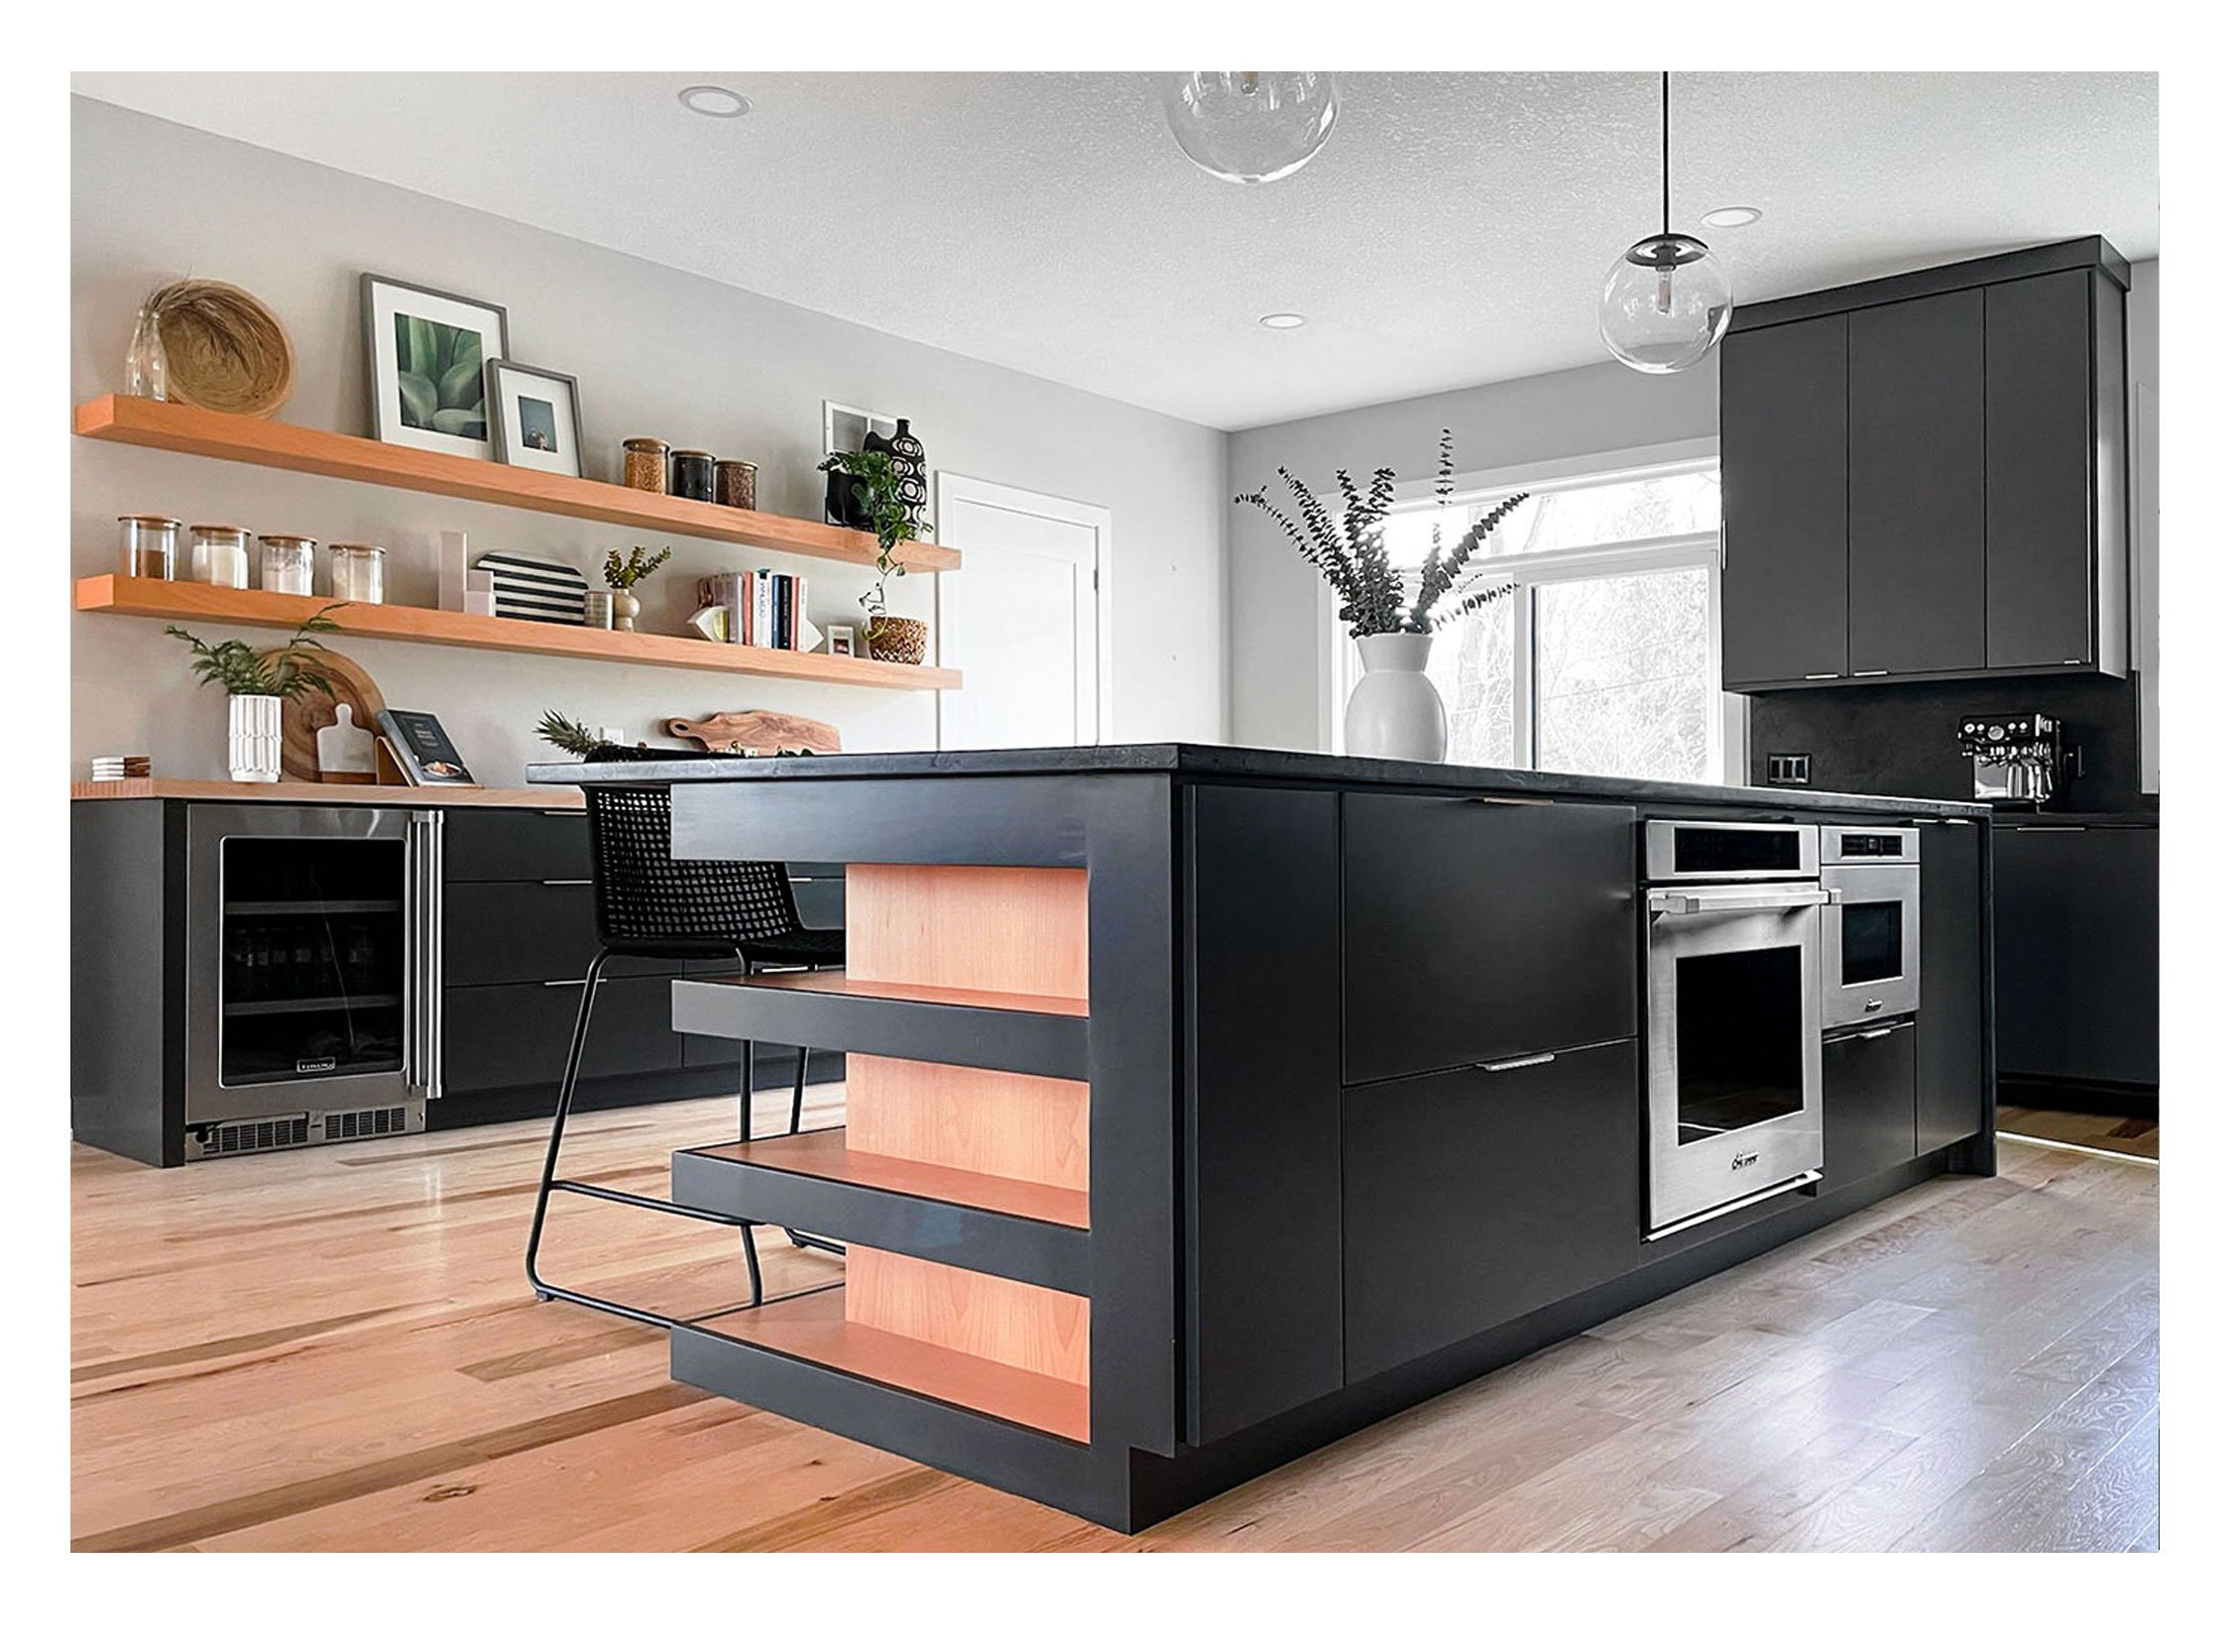 A clean, sleek, and modern Leawood kitchen